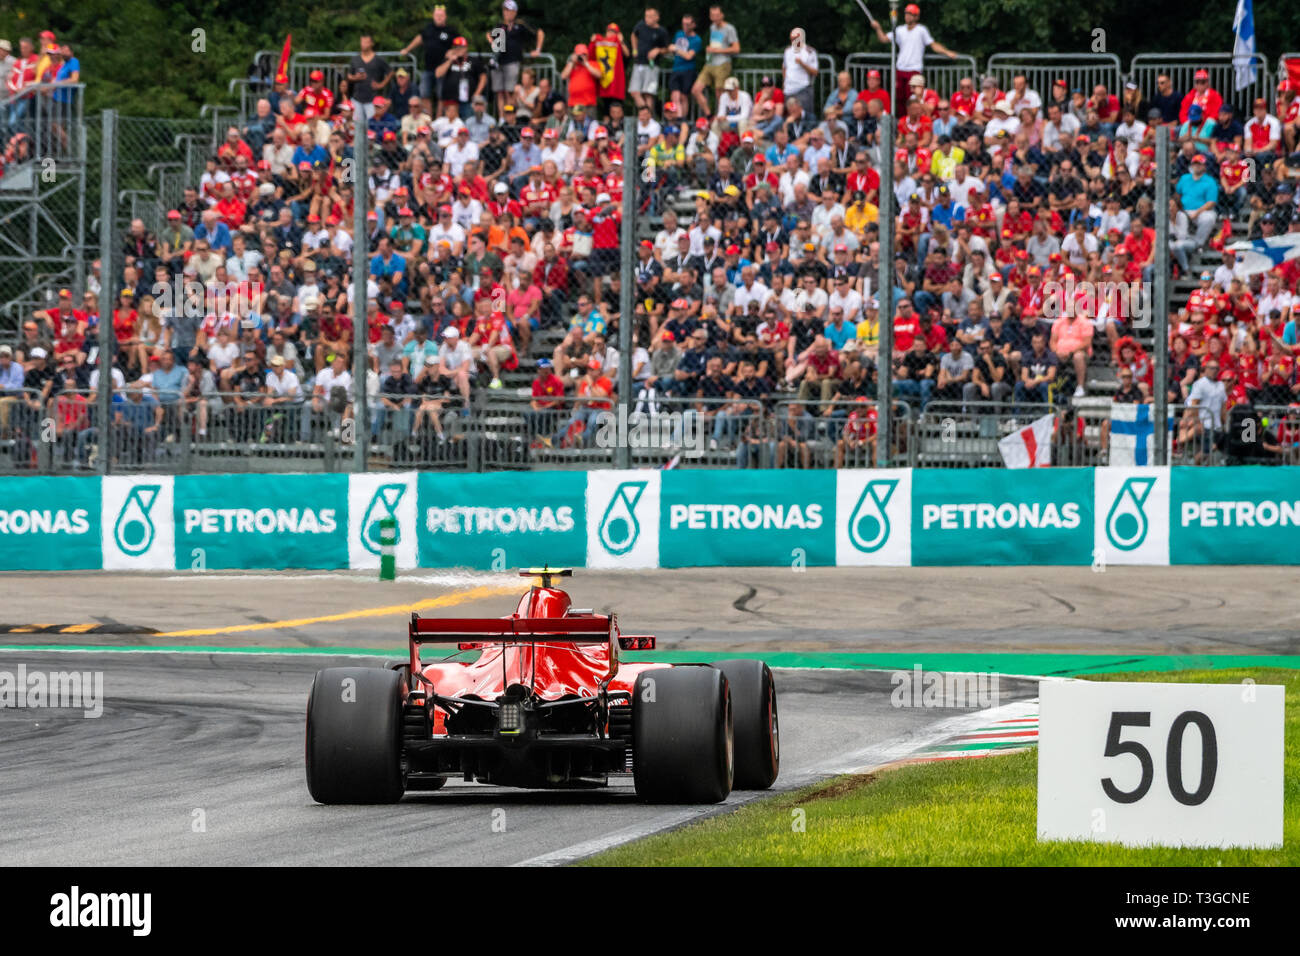 Monza/Italy - #7 Kimi Raikkonen (Ferrari) at the Roggia chicane during the Italian GP Stock Photo